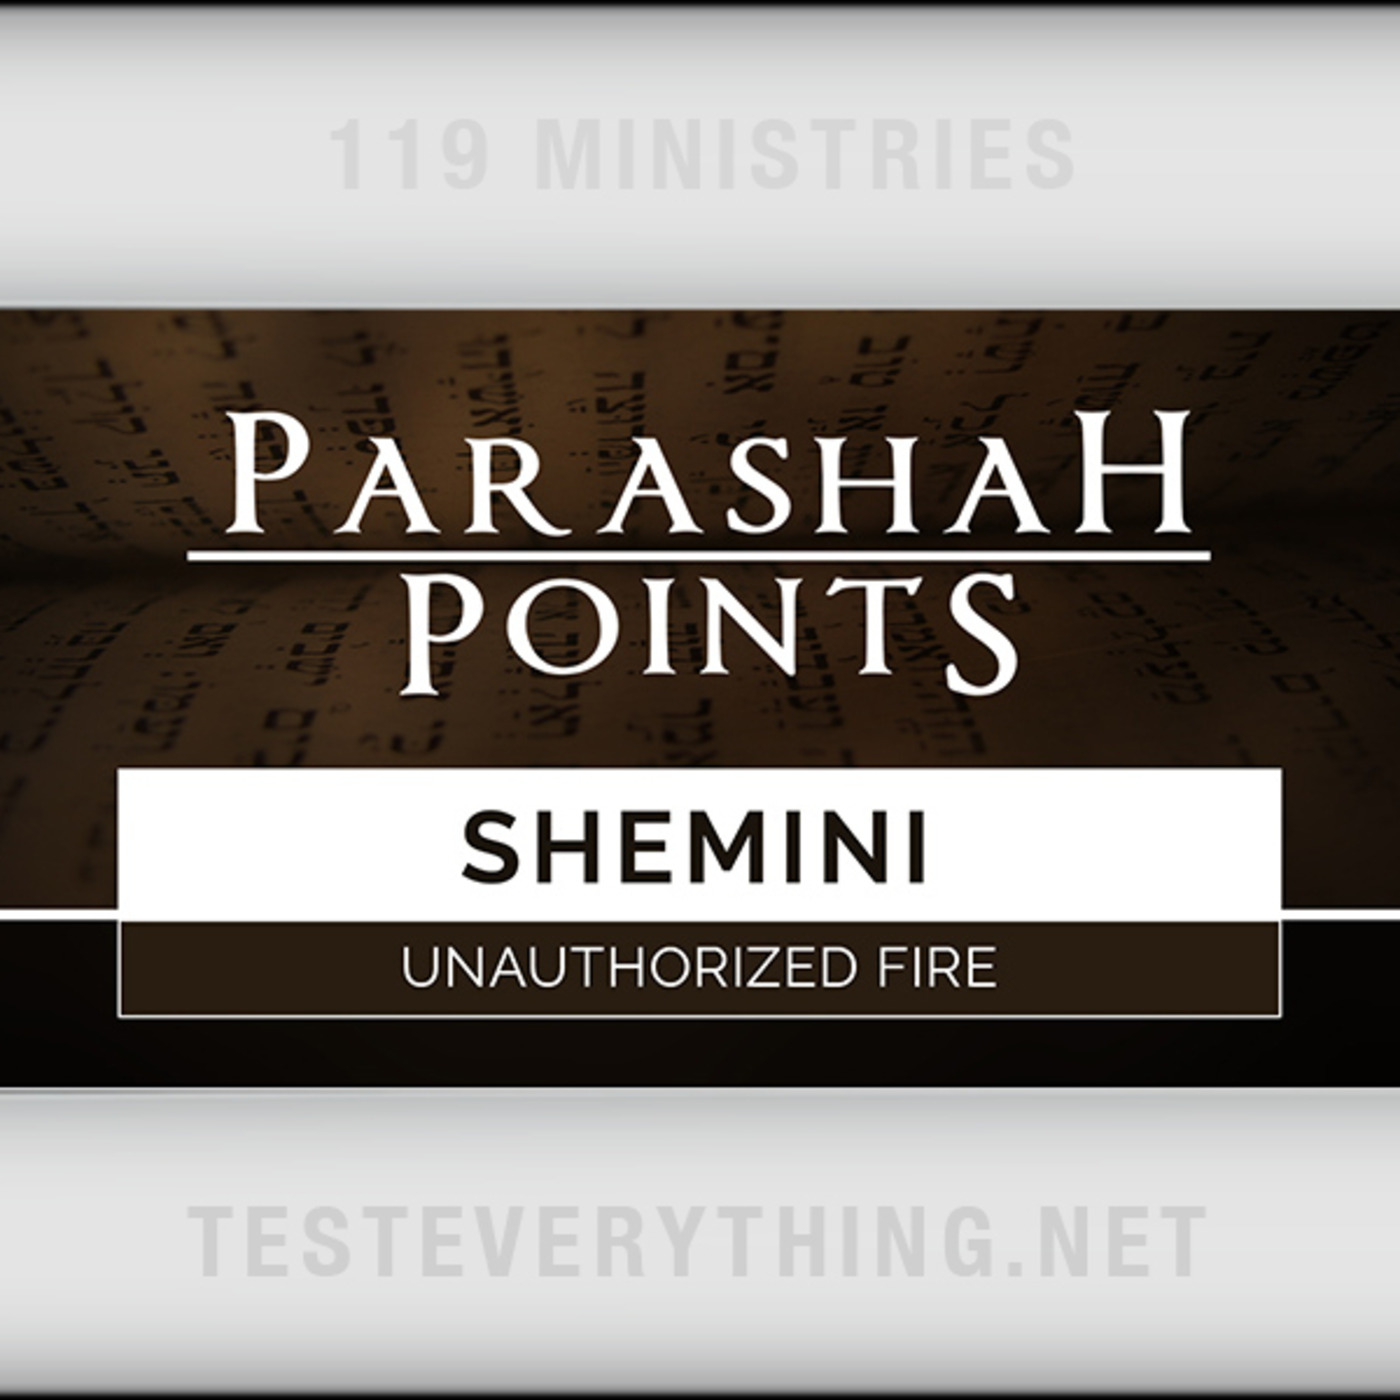 Parashah Points: Shemini - Unauthorized Fire